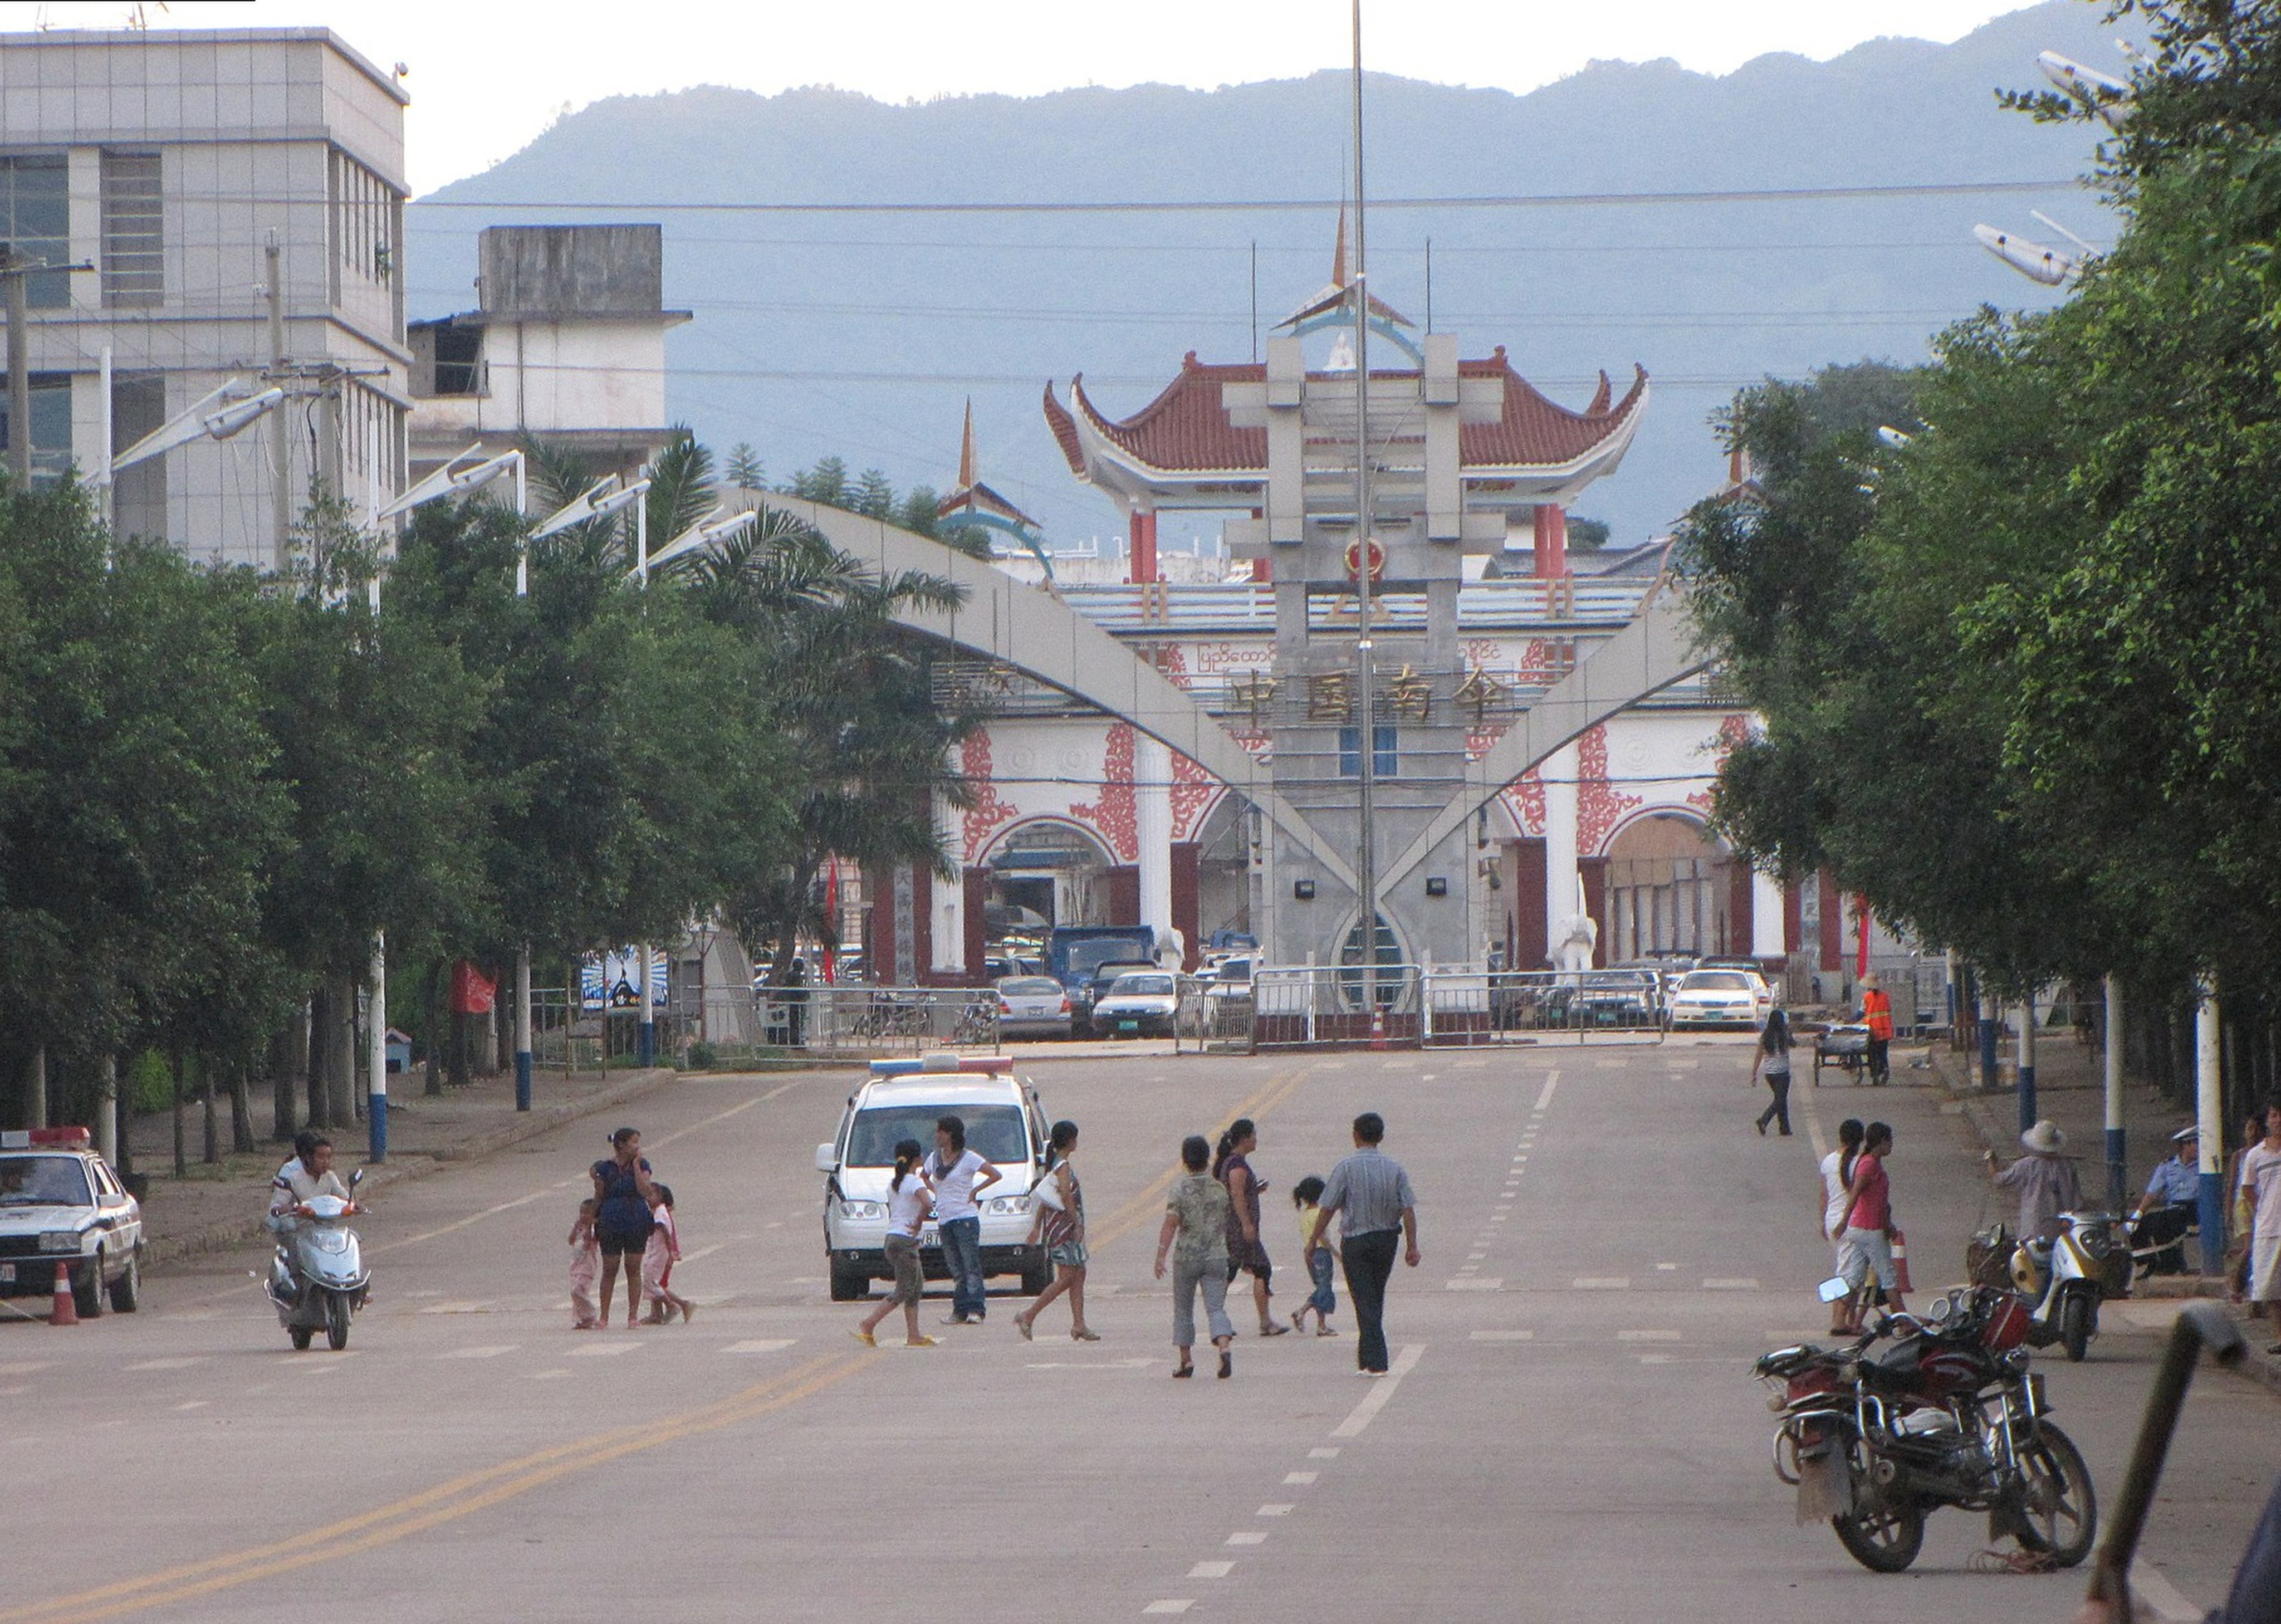 Nansan lies less than 3km from China’s border with Myanmar. Photo: Baidu